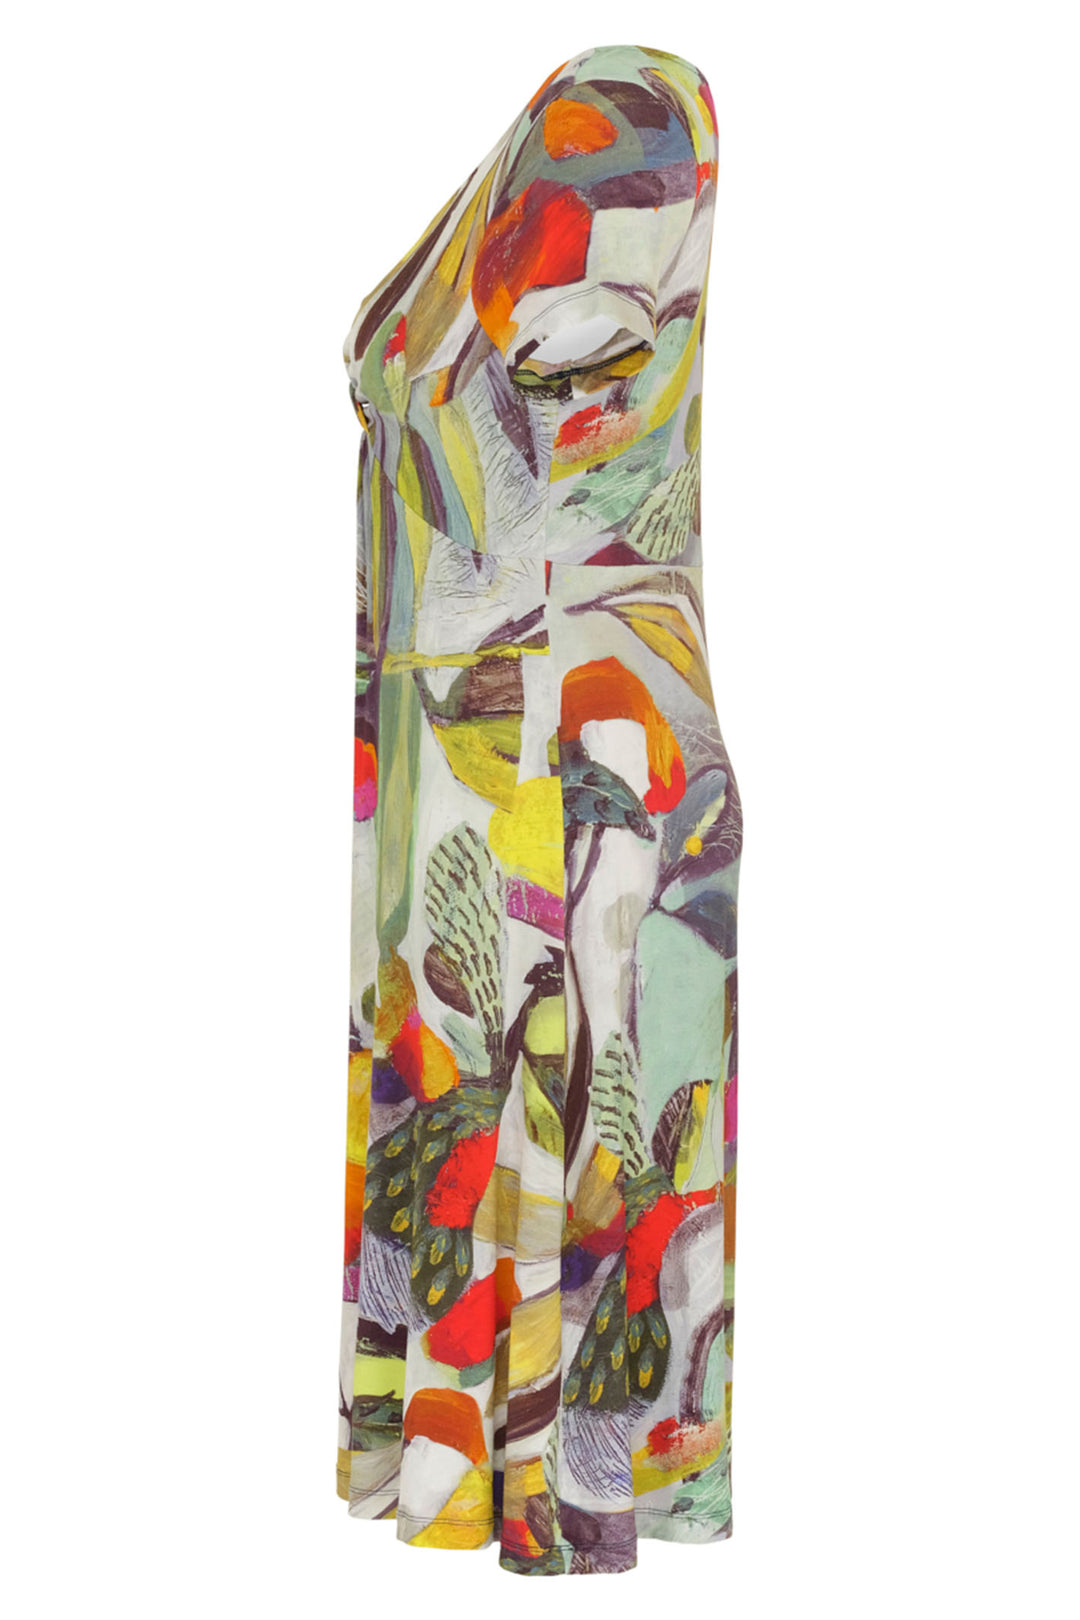 Dolcezza 24696 Simply Art Ests Macleod Botanica Multi Coloured Dress - Shirley Allum Boutique